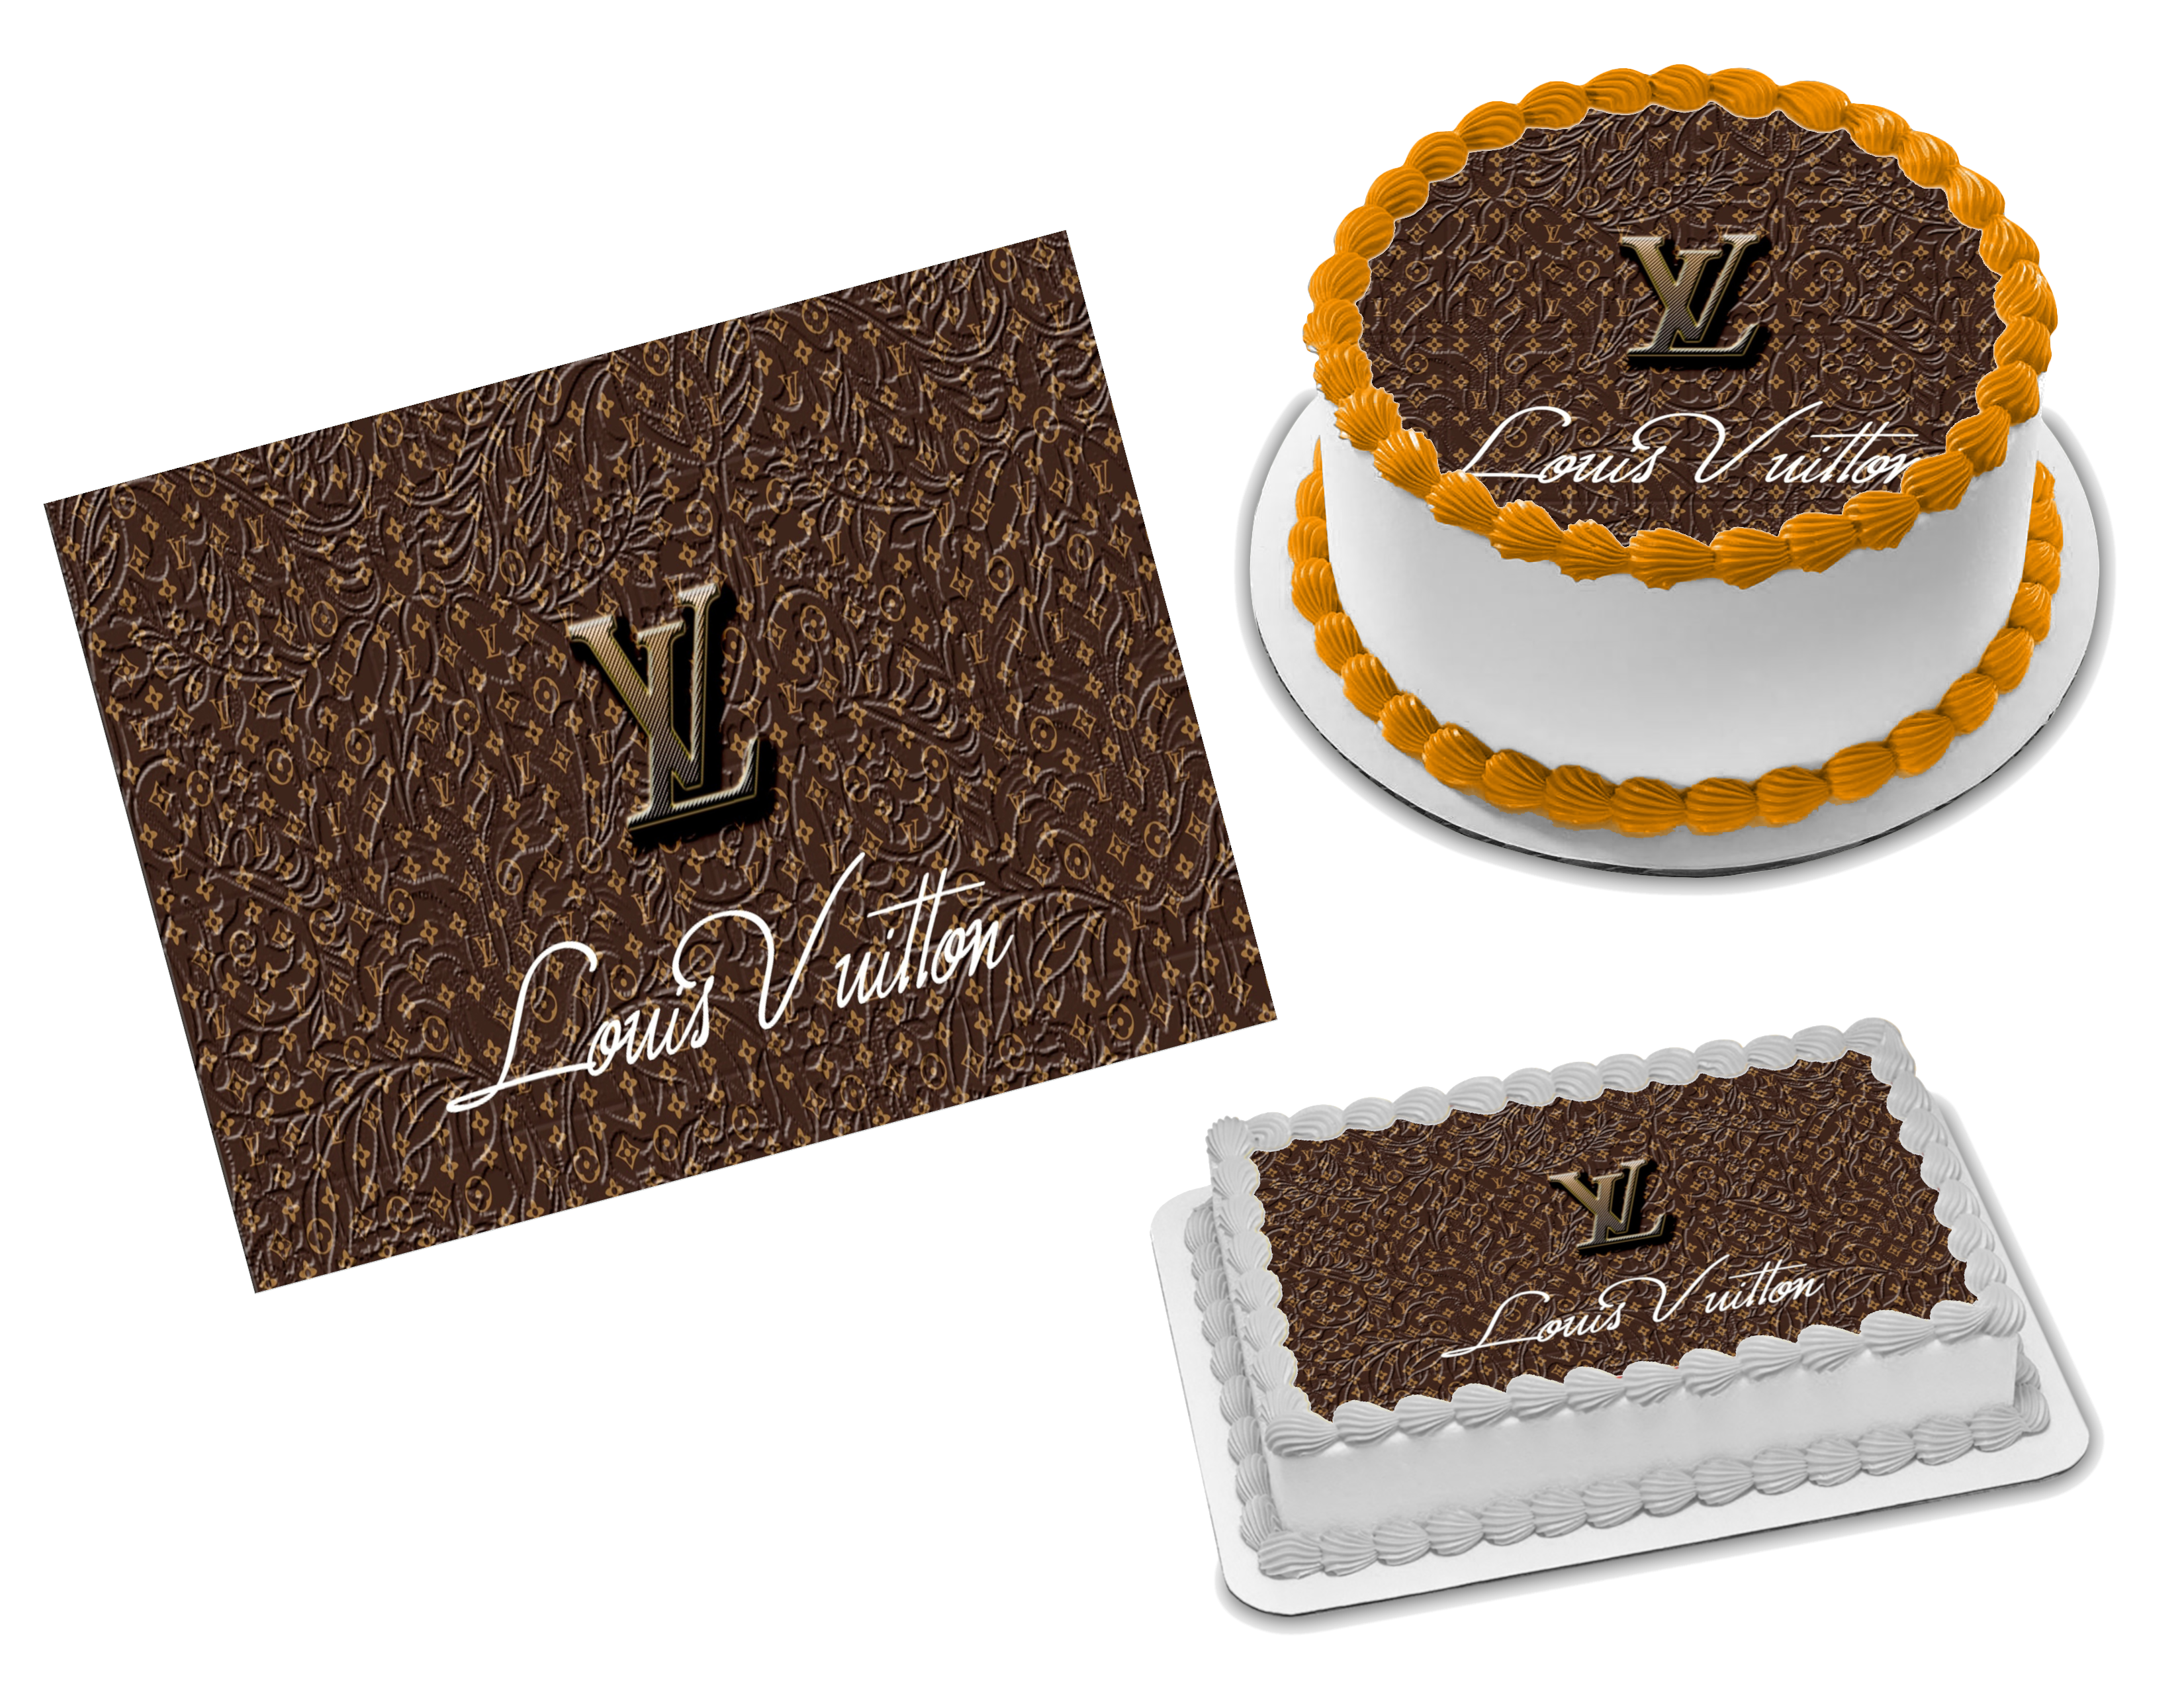 LV pastry : r/Louisvuitton